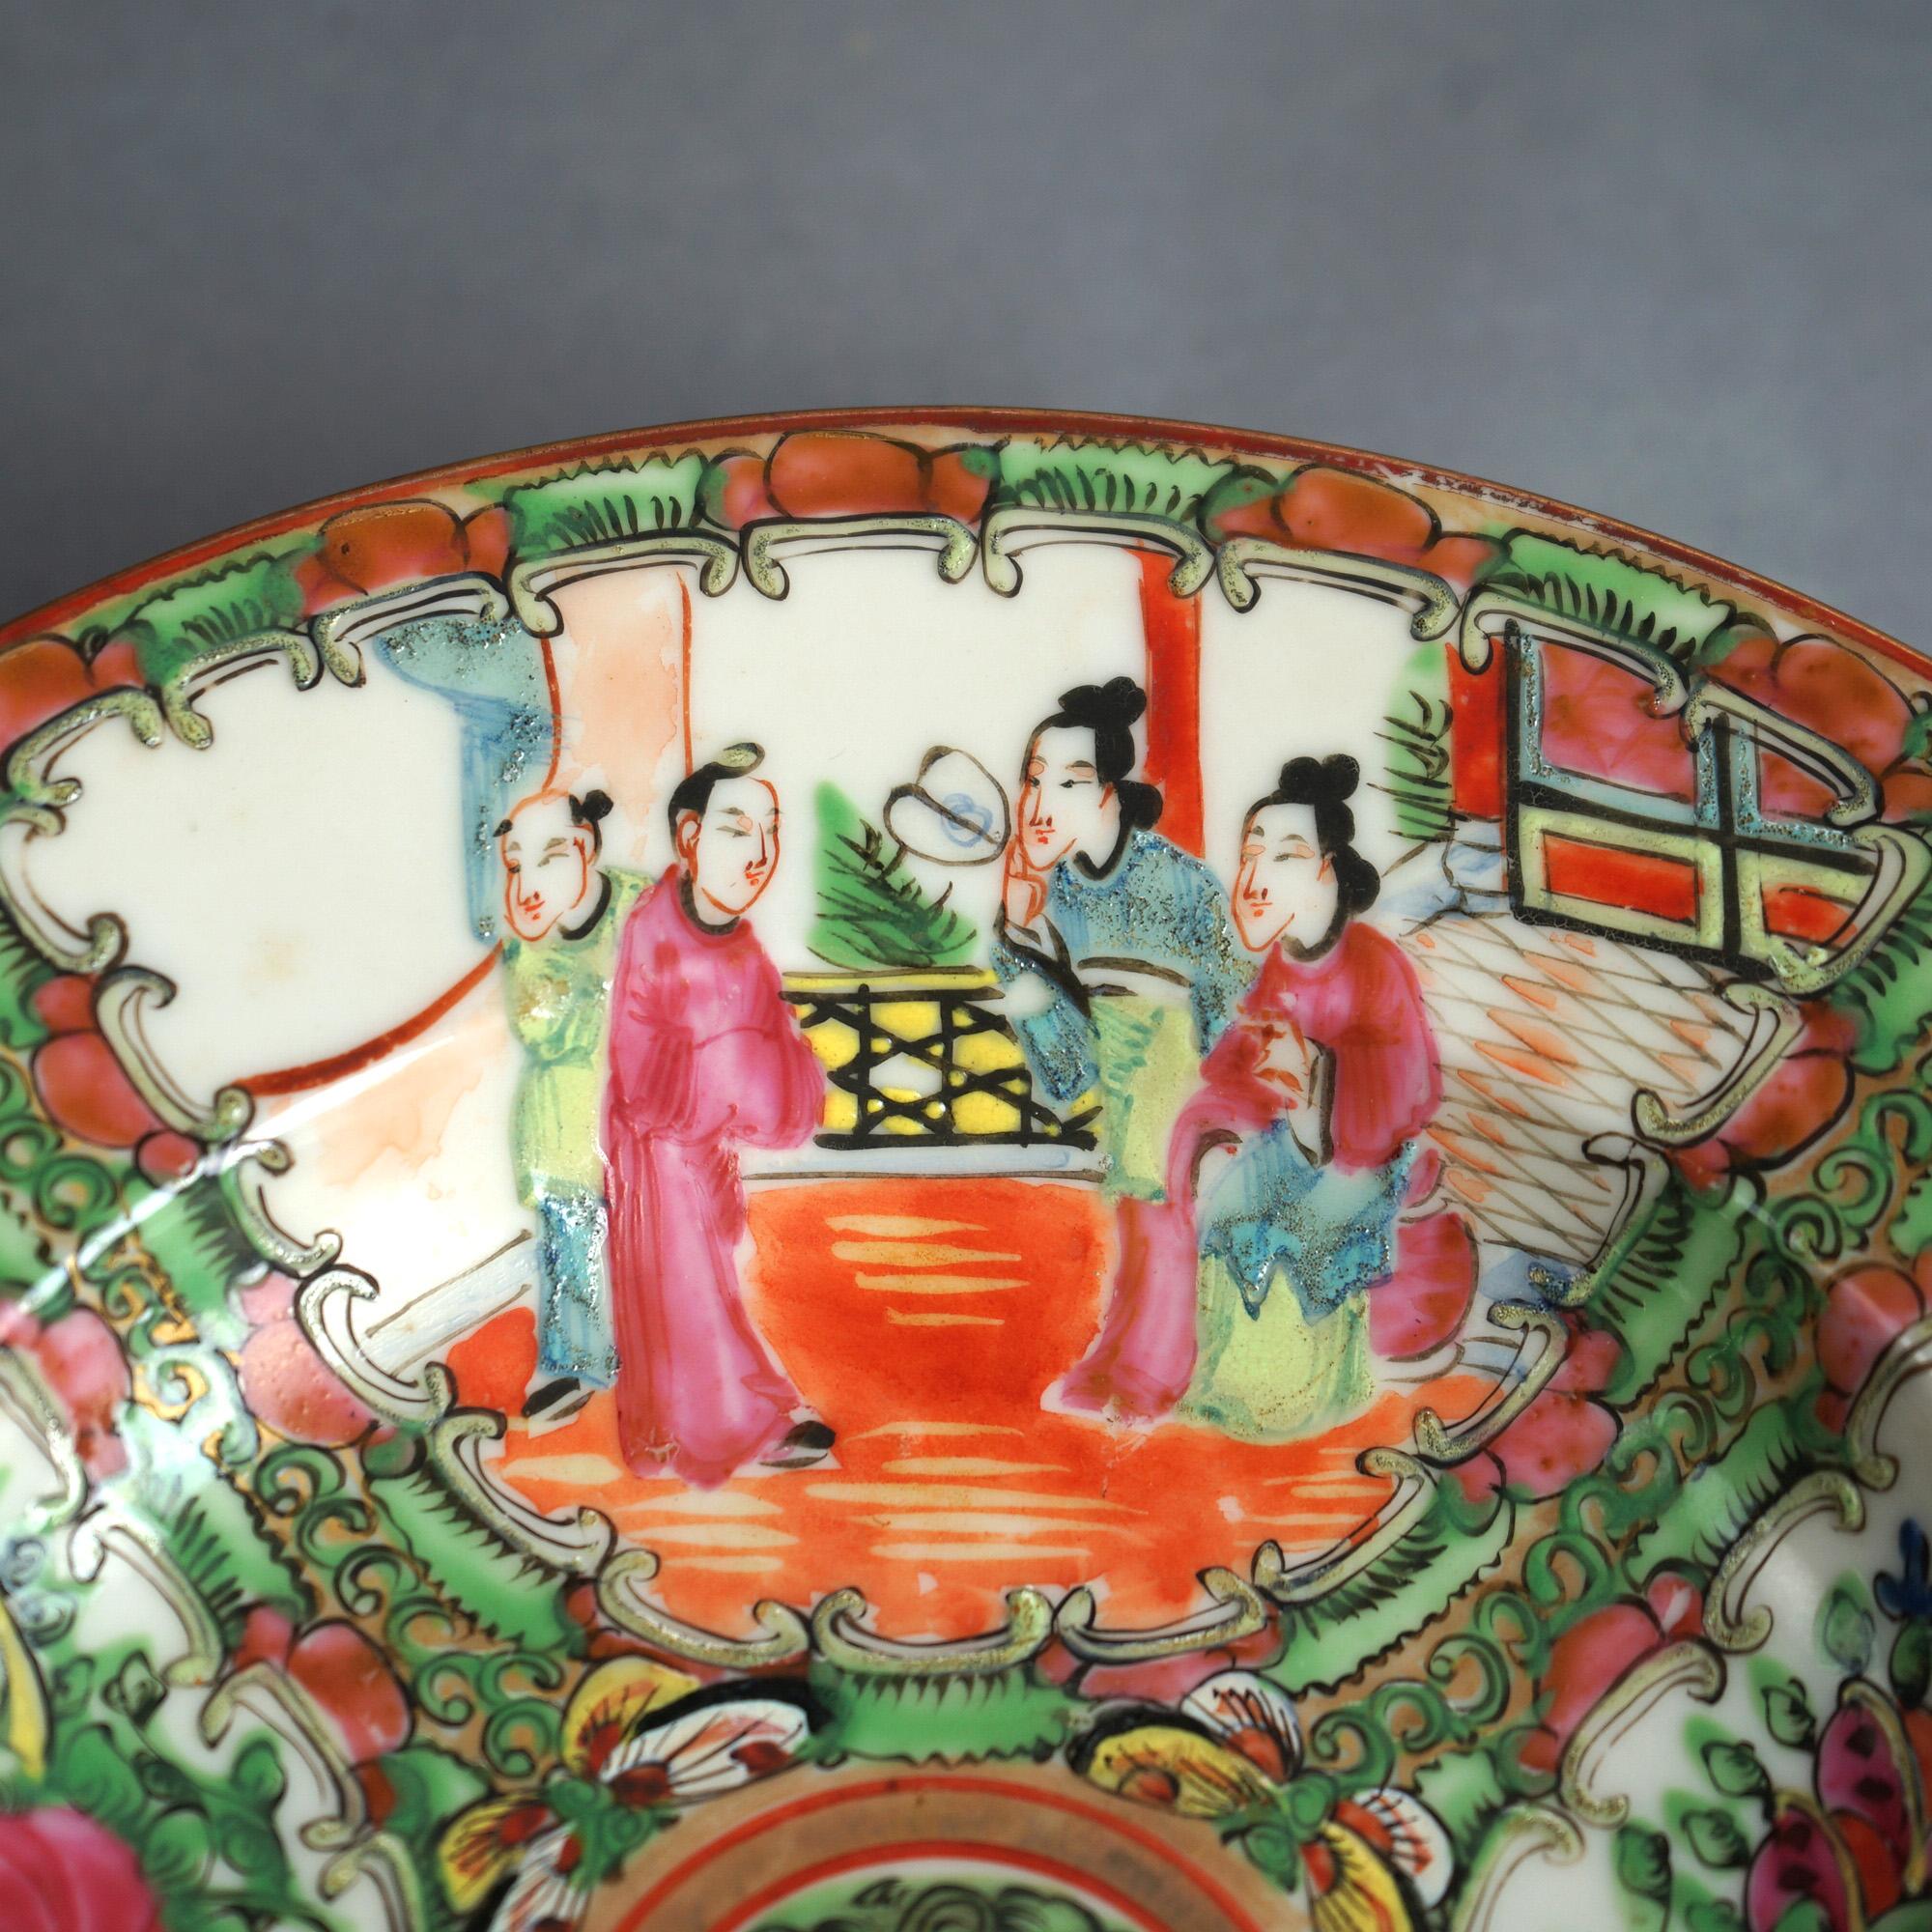 Antique Chinese Rose Medallion Porcelain Bowl with Reserves having Gardens & Genre Scenes C1900

Measures - 1.5